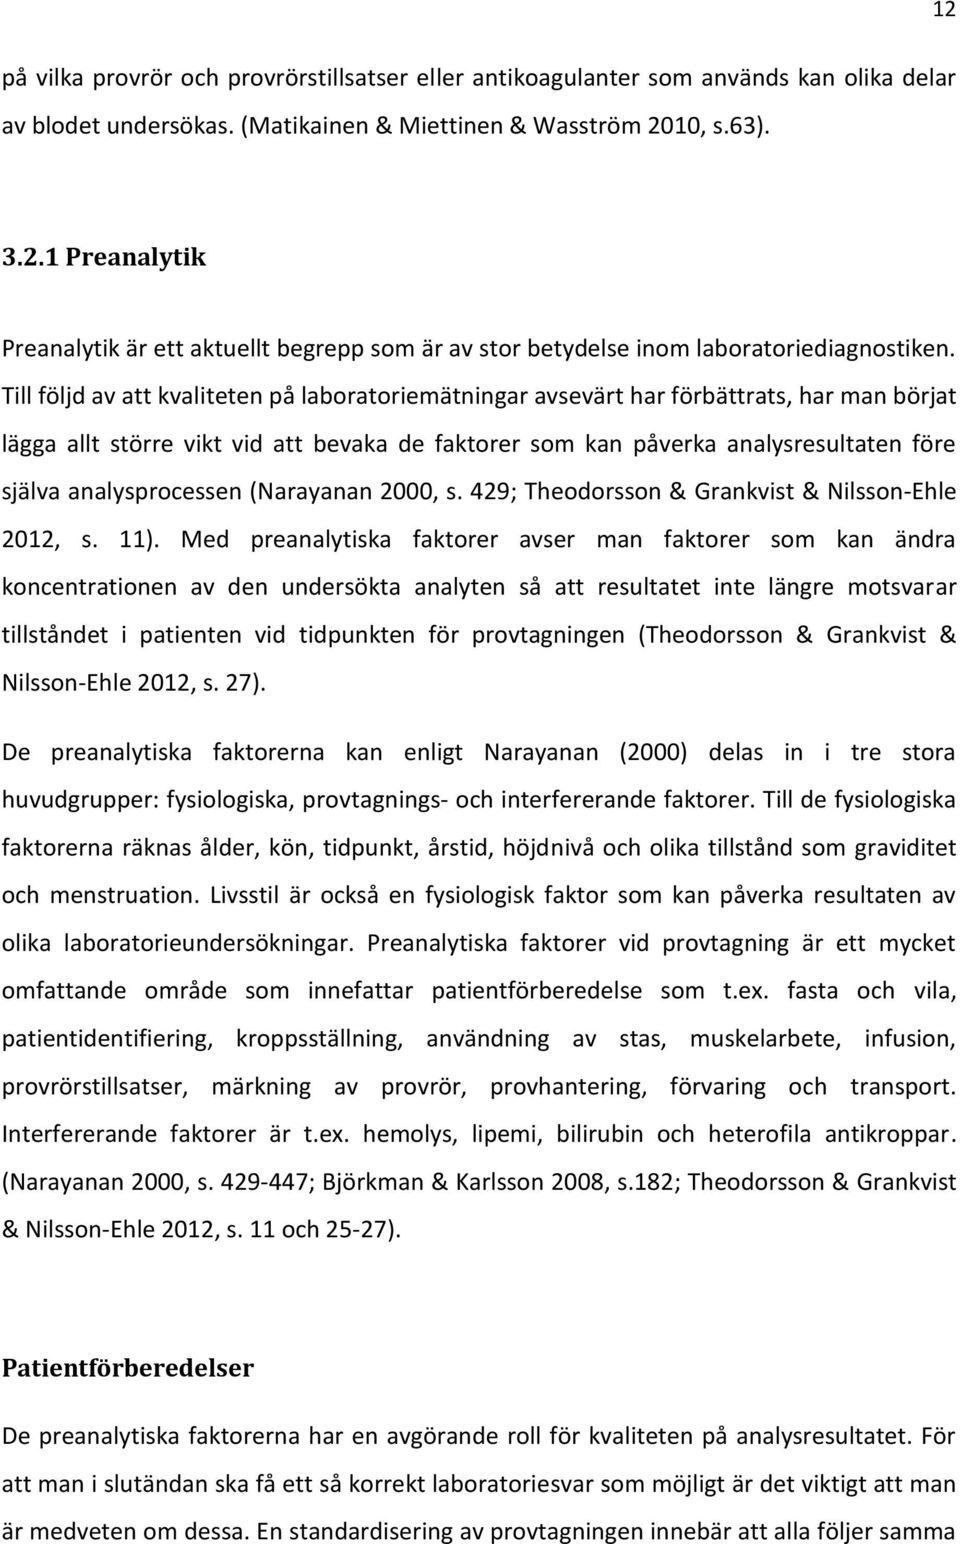 analysprocessen (Narayanan 2000, s. 429; Theodorsson & Grankvist & Nilsson-Ehle 2012, s. 11).